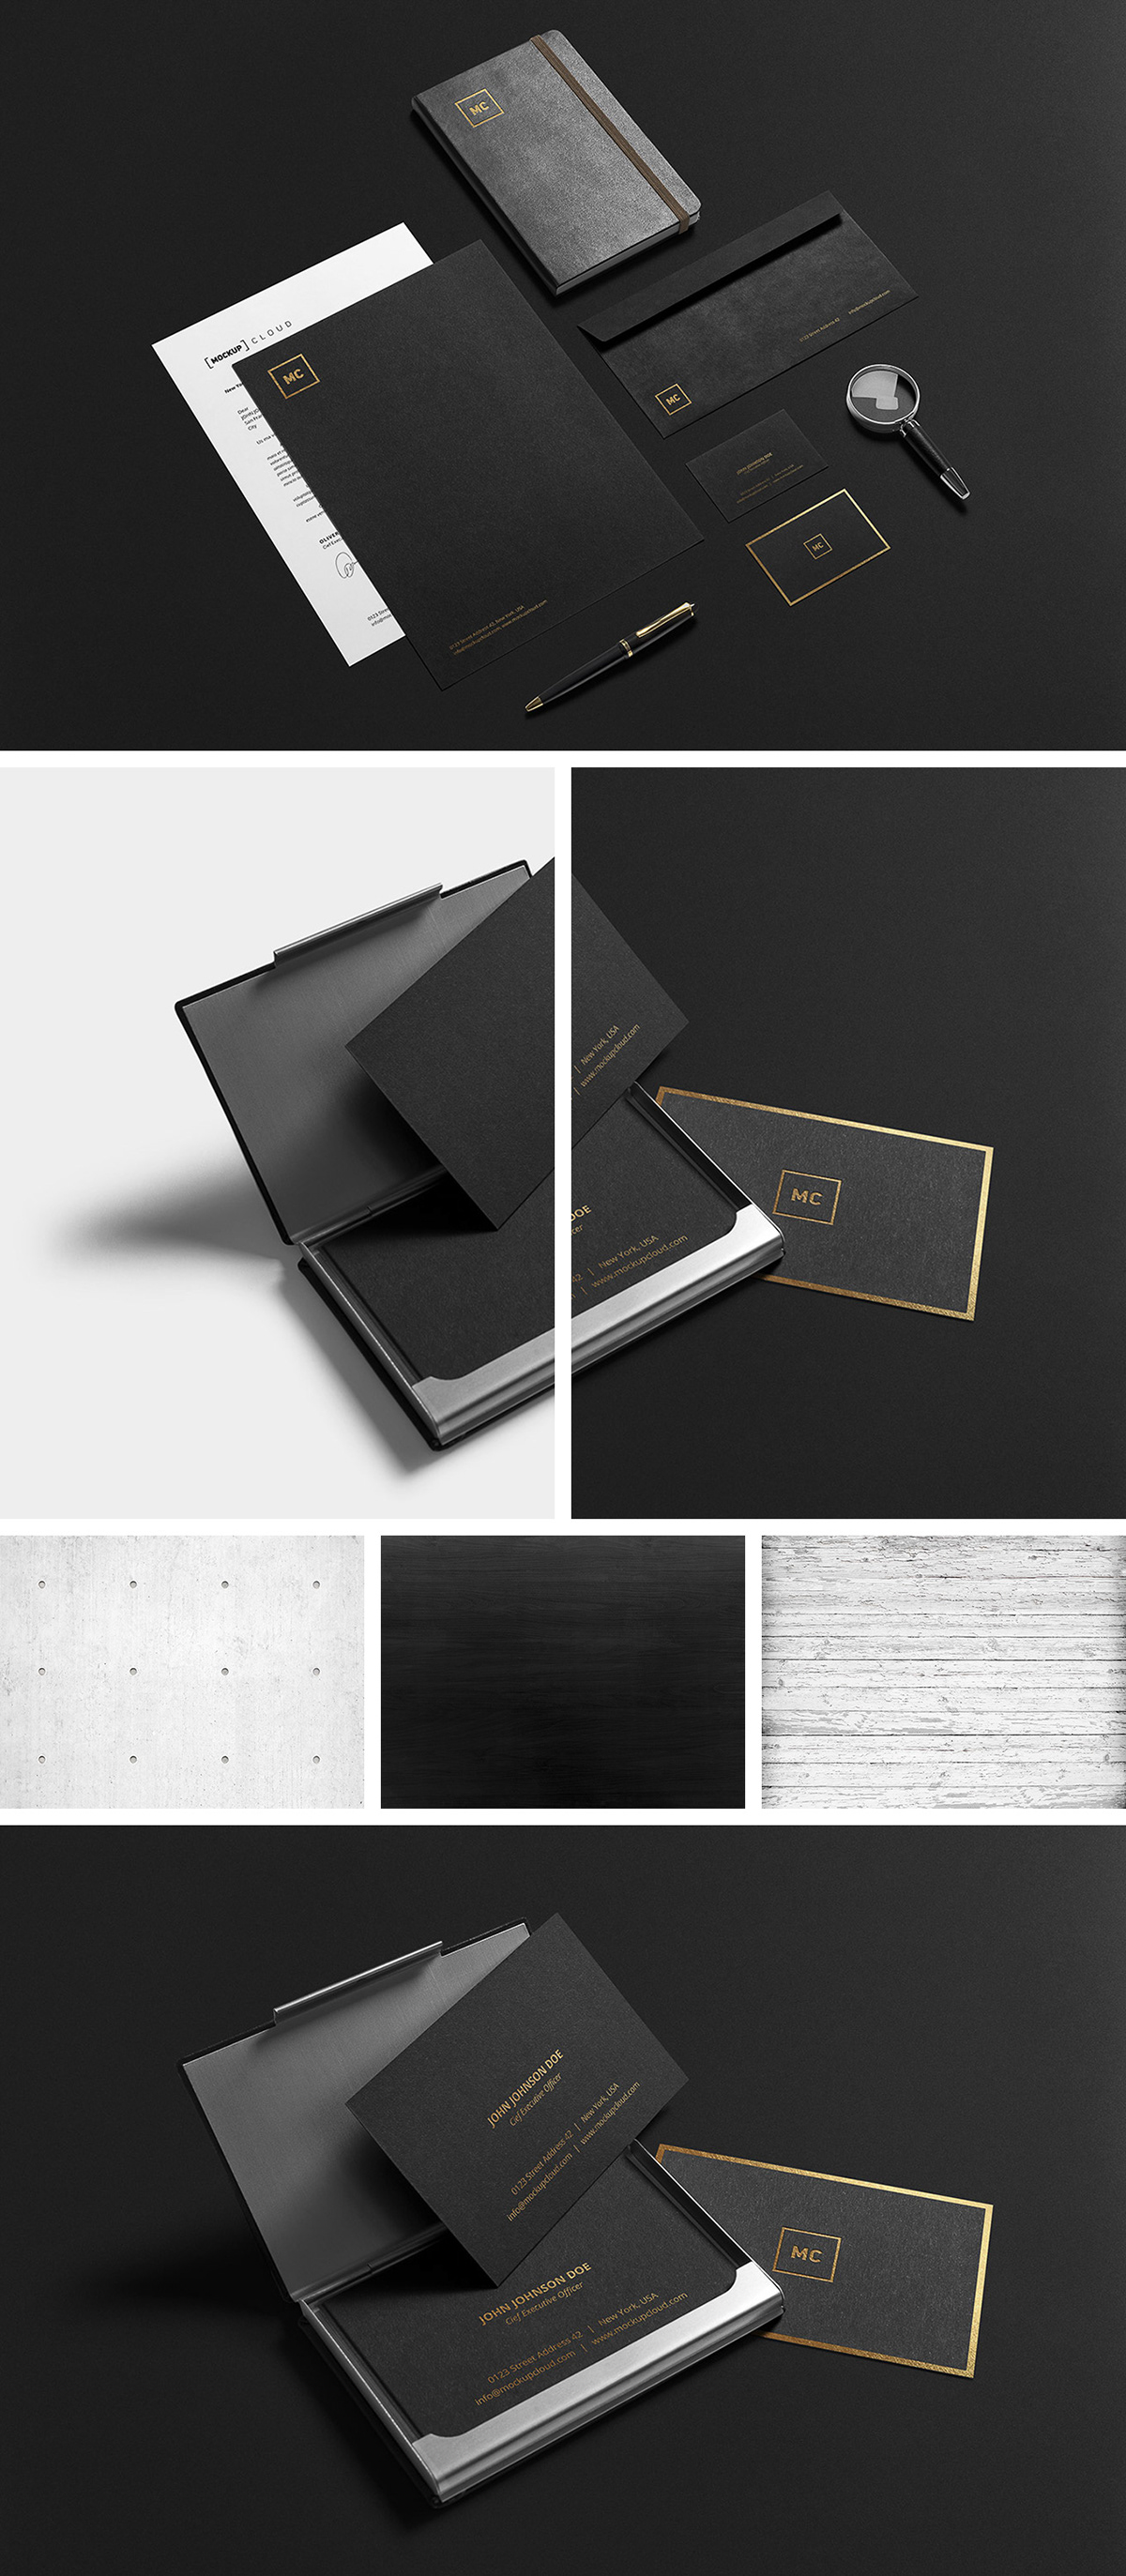 Mockup mockup scenes stationery mockup Stationery paper mockup background textures black luxury card mockup